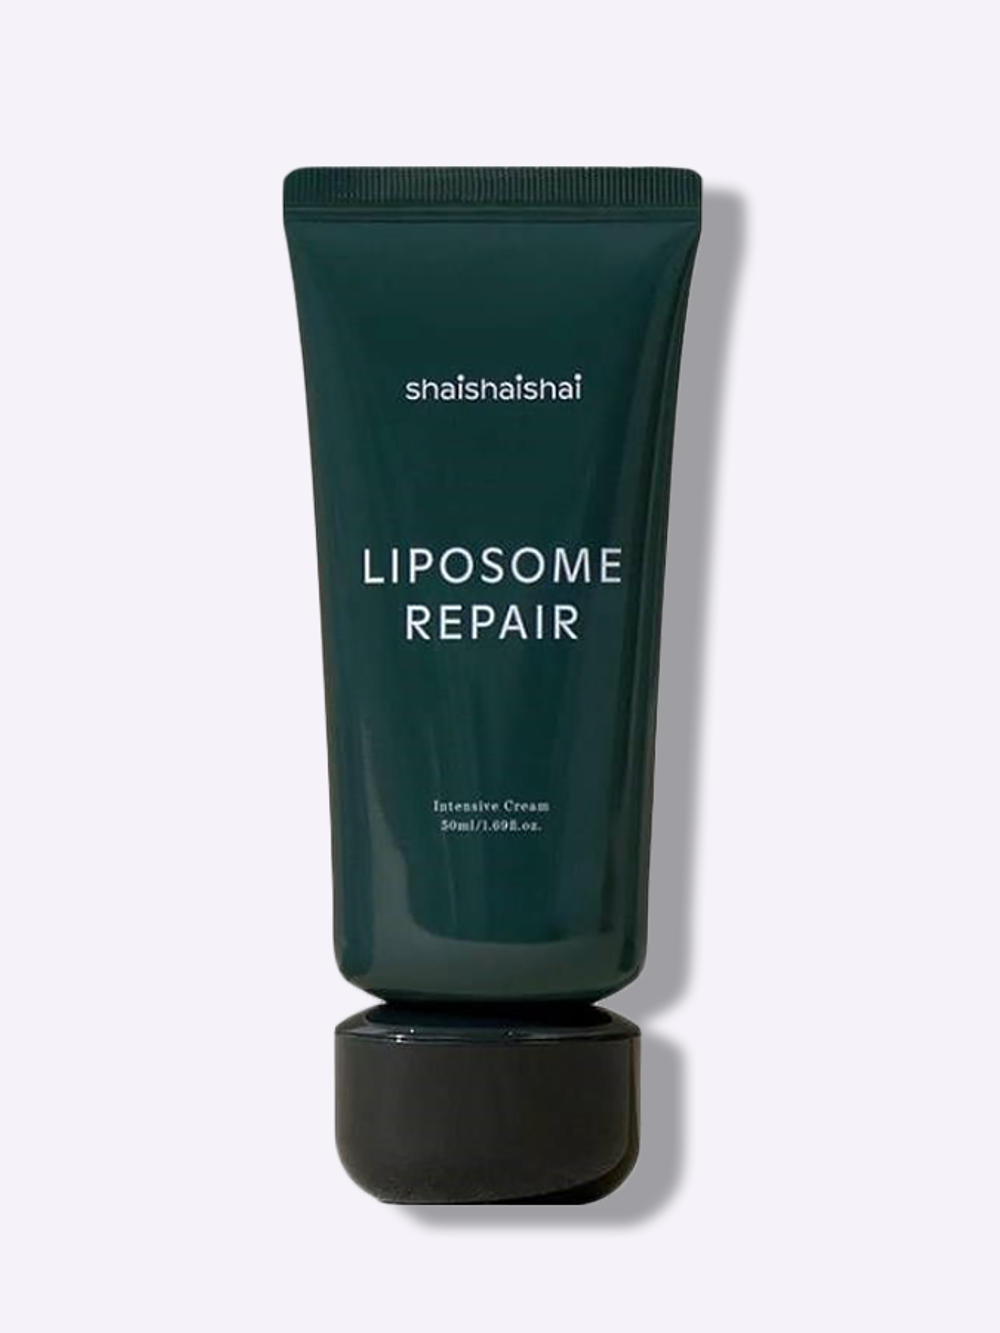 SHAISHAISHAI Liposome Repair Intensive Cream липосомальный восстанавливающий крем